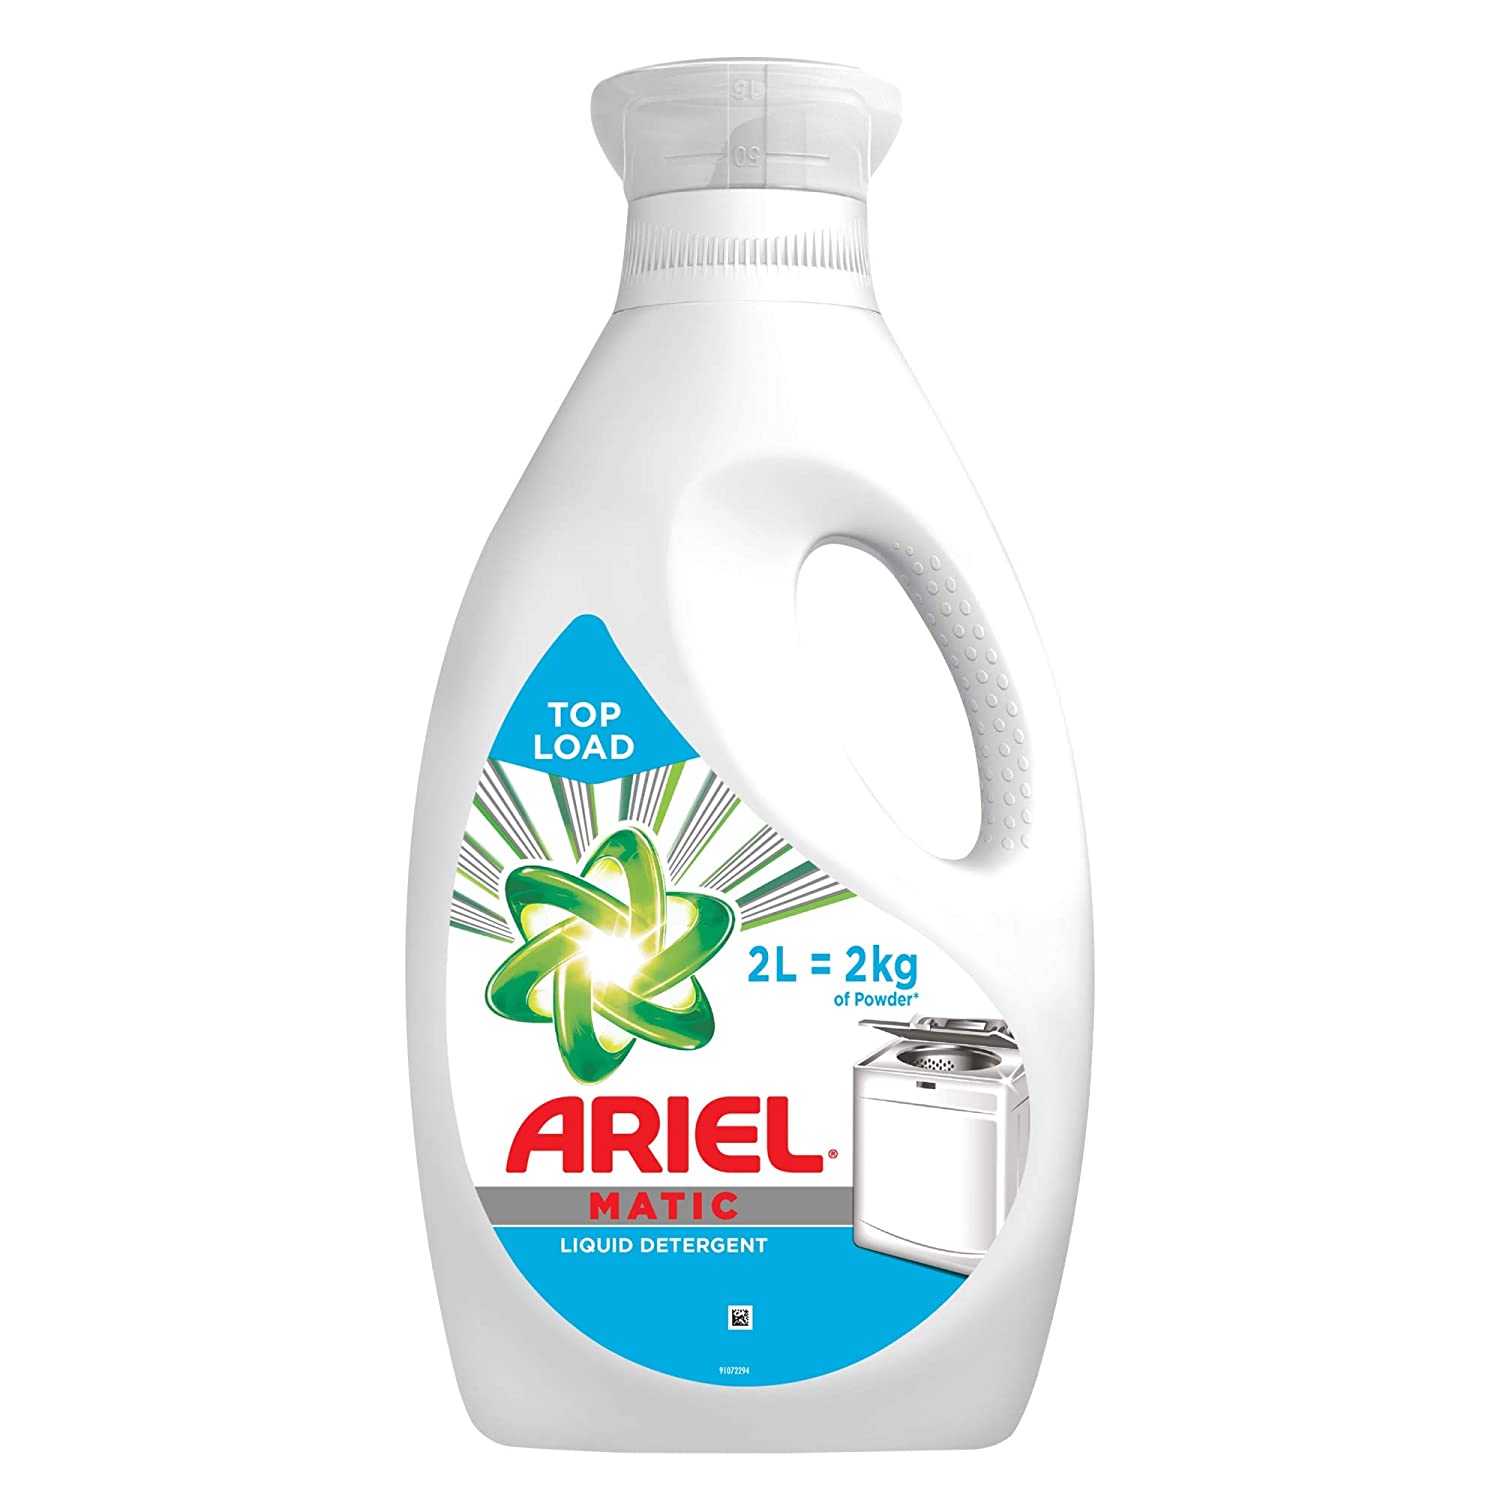 Ariel Matic Top Load Liquid Detergent (Bottle), 2 L